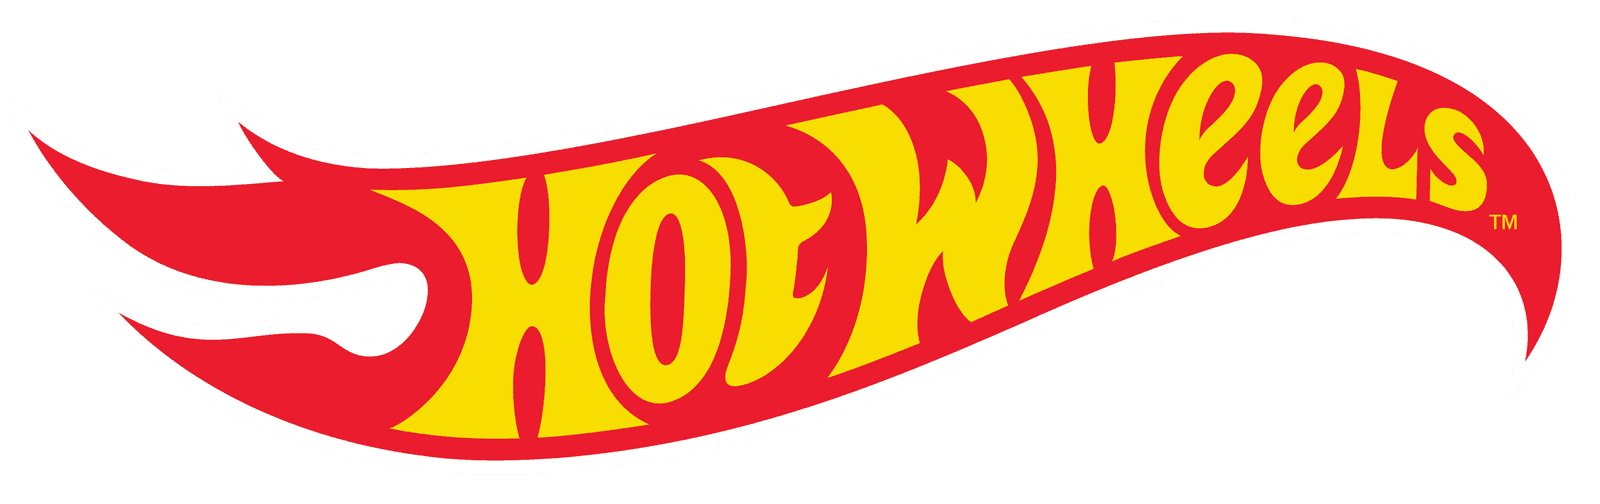 Hot Wheels logo and the history behind the company | LogoMyWay